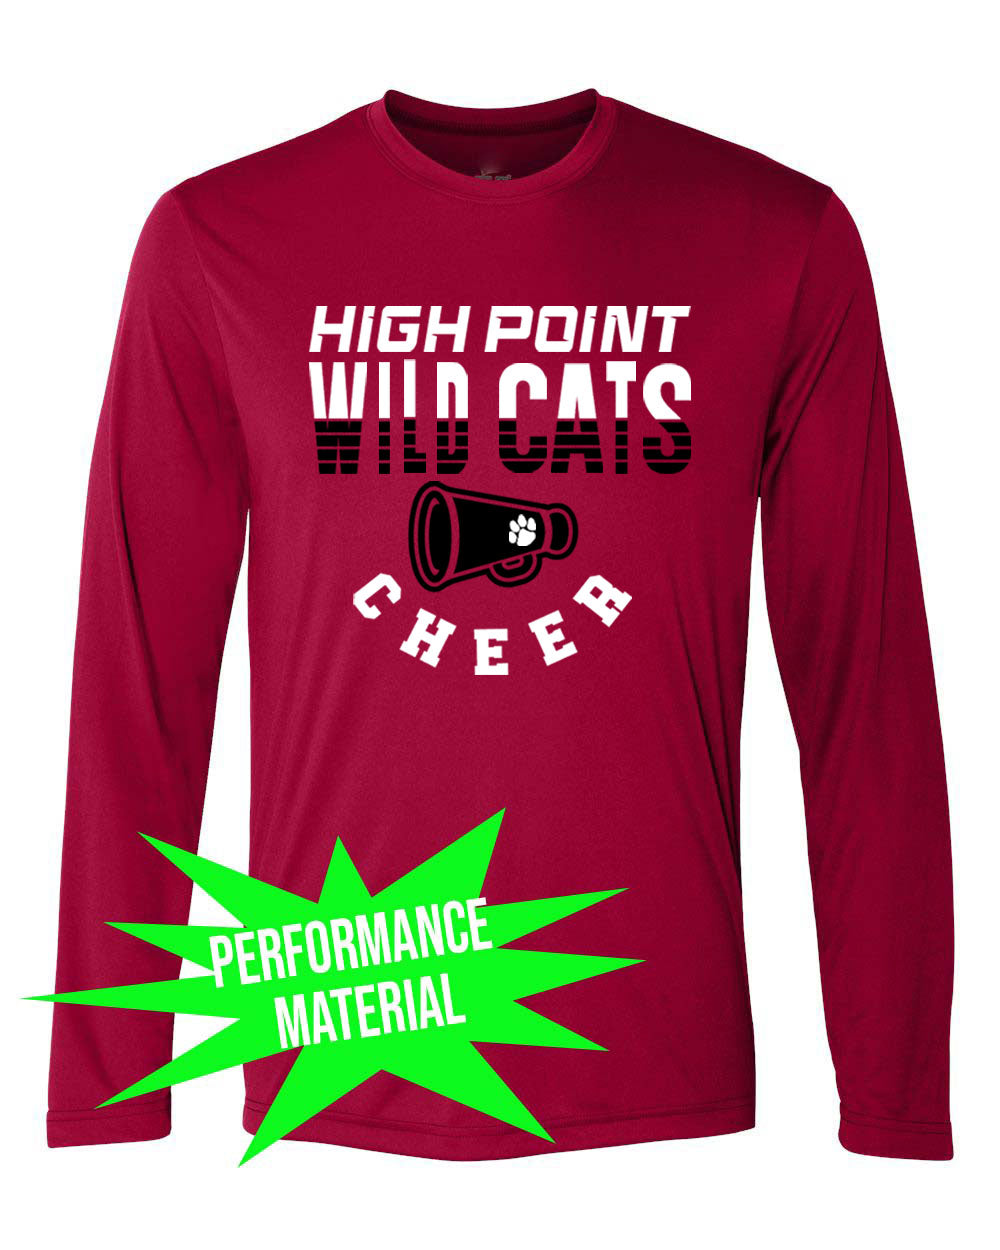 Wildcats cheer Performance Material Design 2 Long Sleeve Shirt